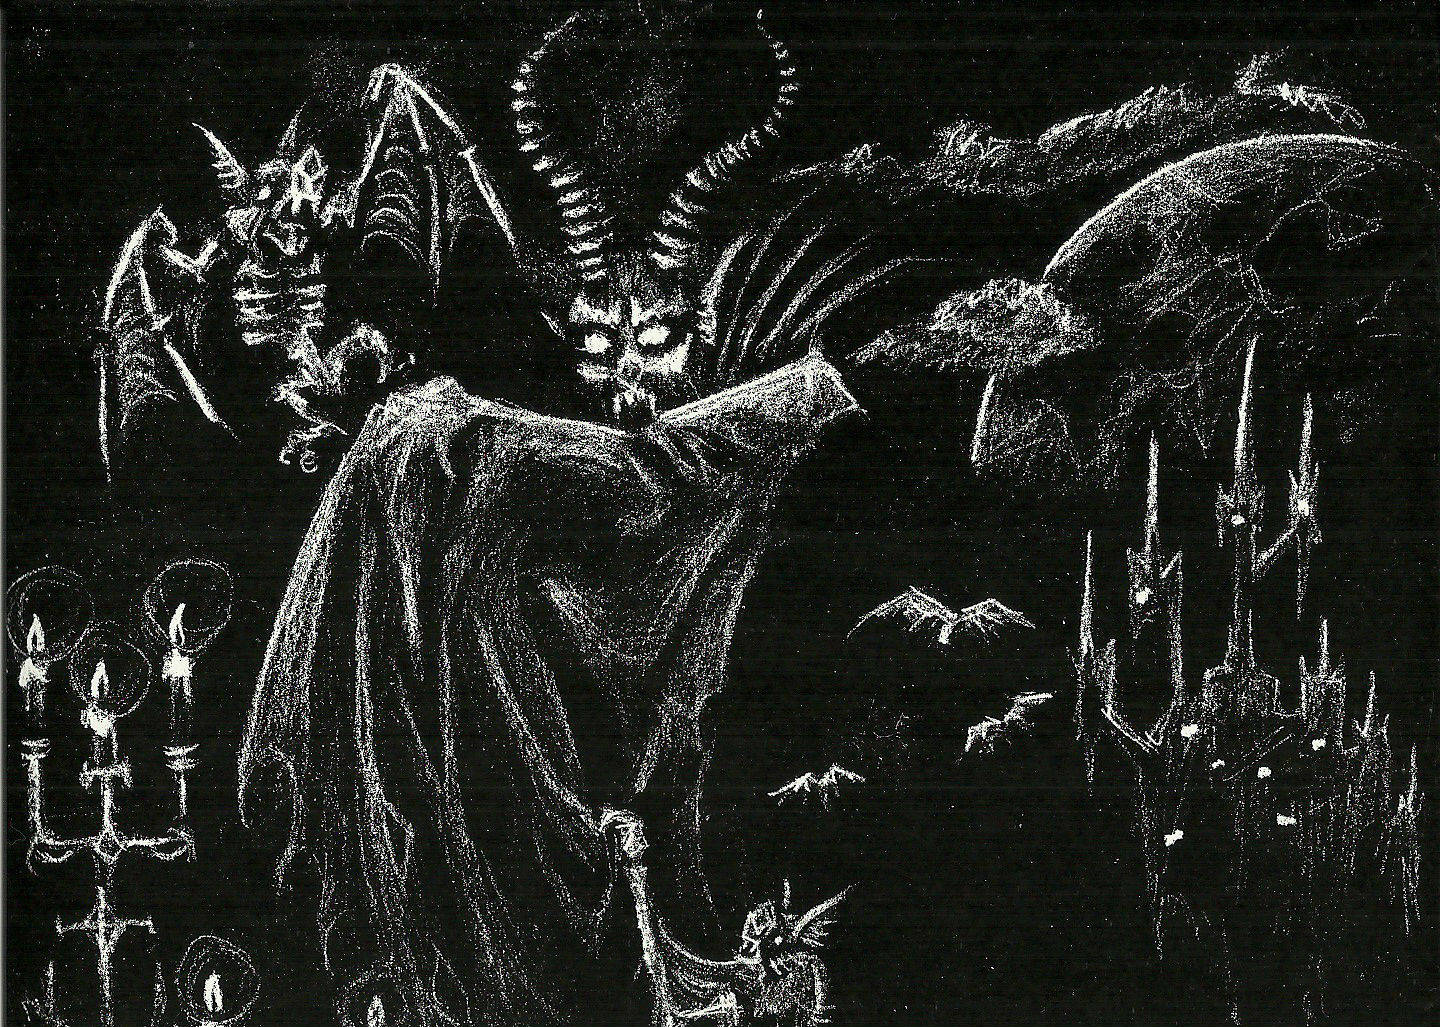 Satanic 1440X1027 Wallpaper and Background Image